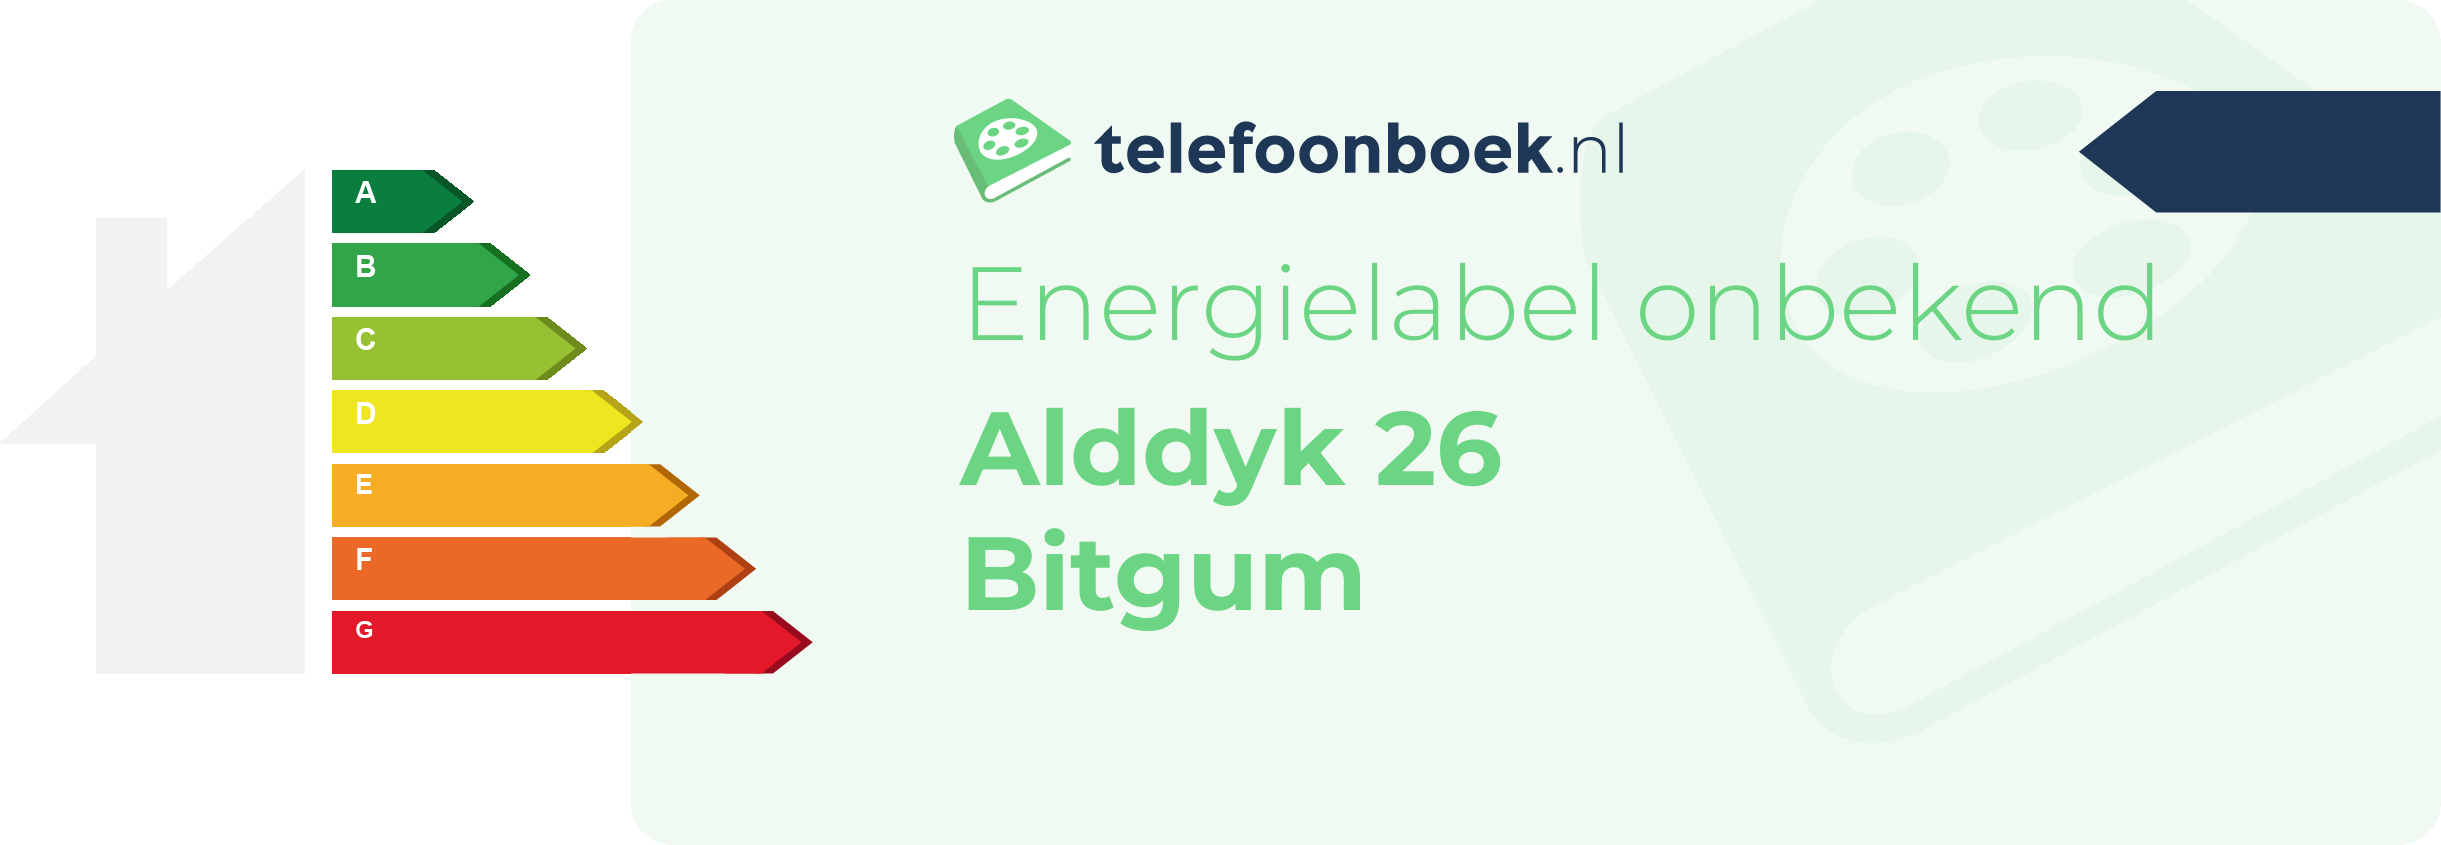 Energielabel Alddyk 26 Bitgum